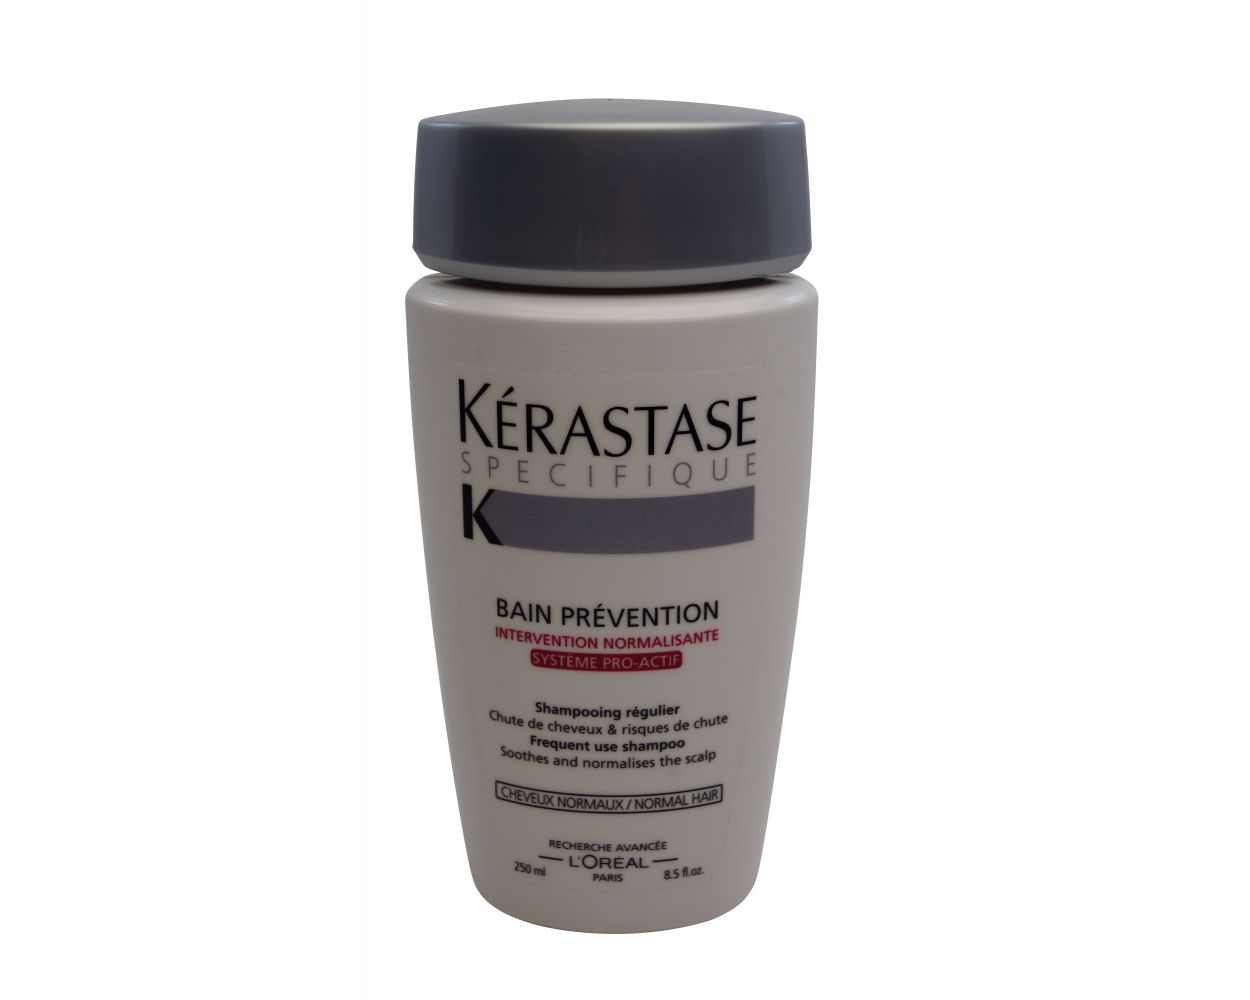 Kerastase shampoo | Hair Products -